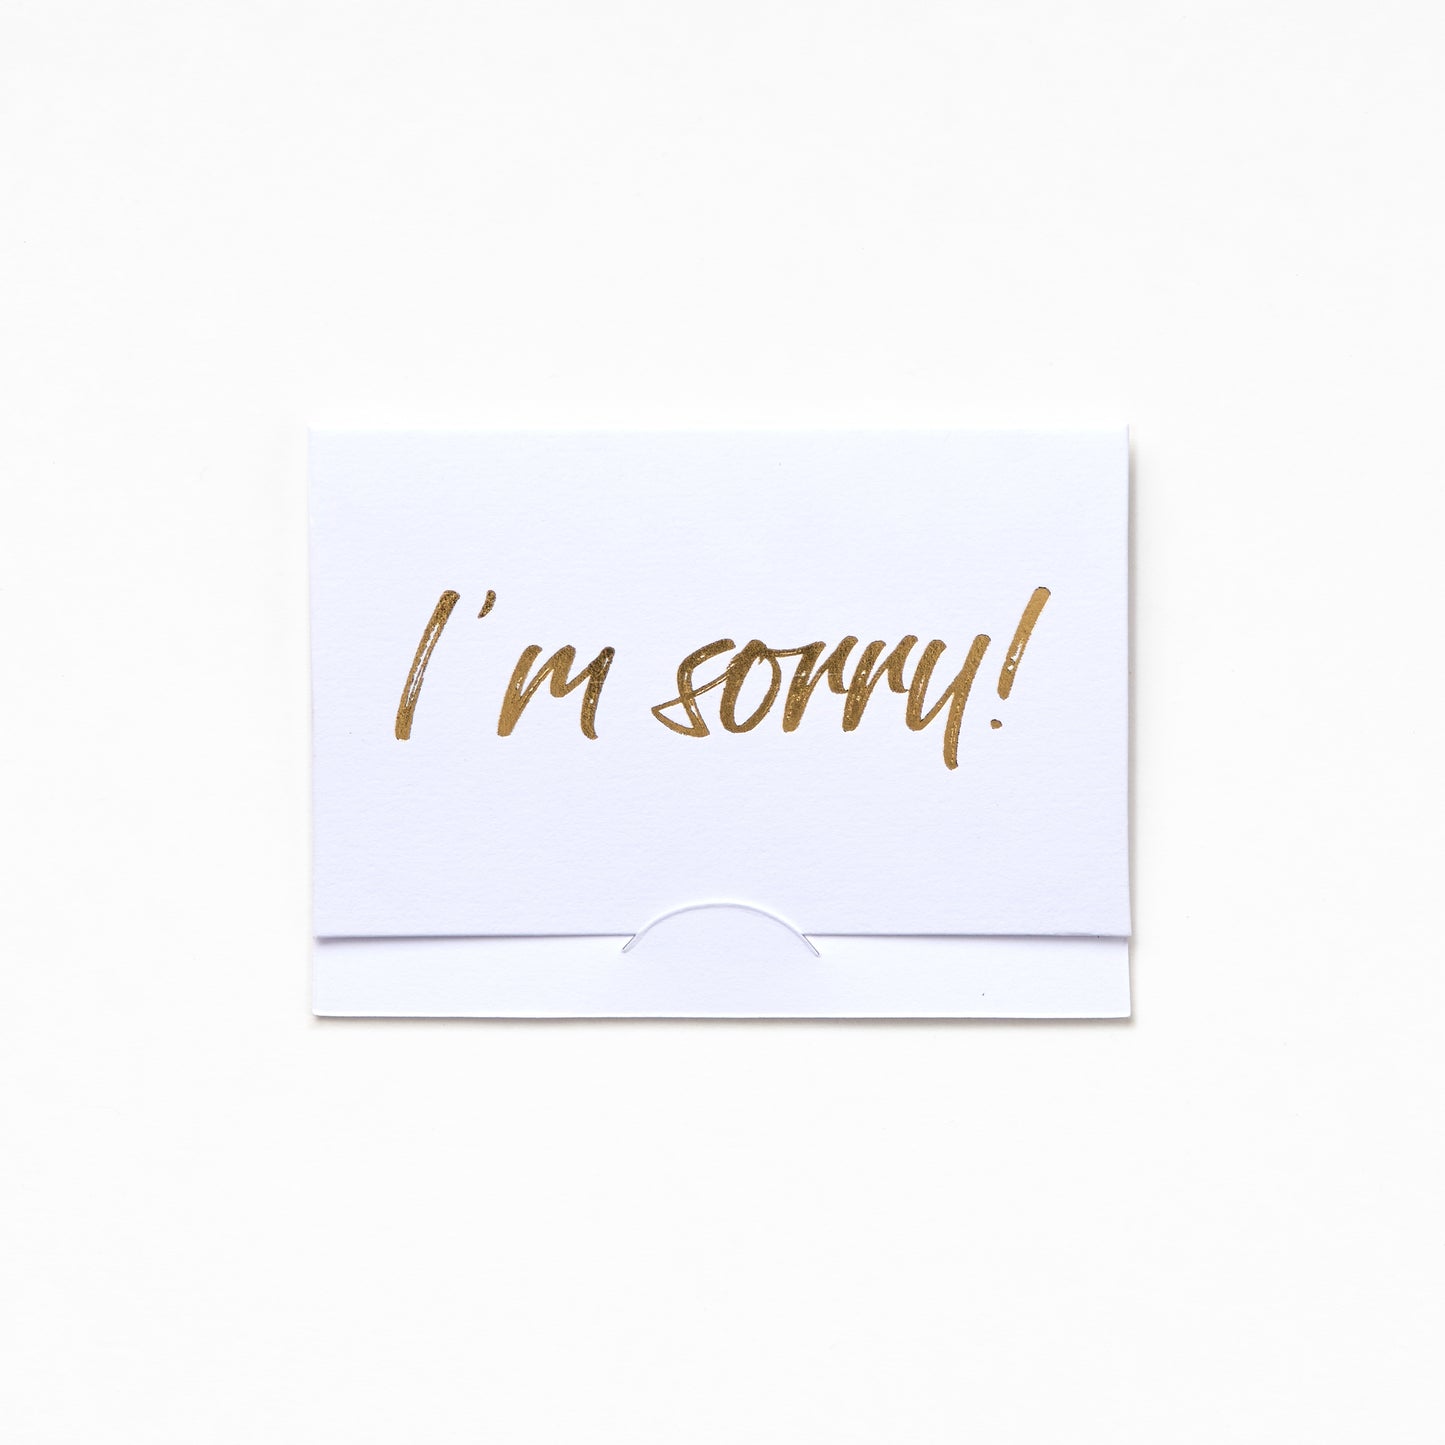 Pocket Greeting Card - I'M SORRY